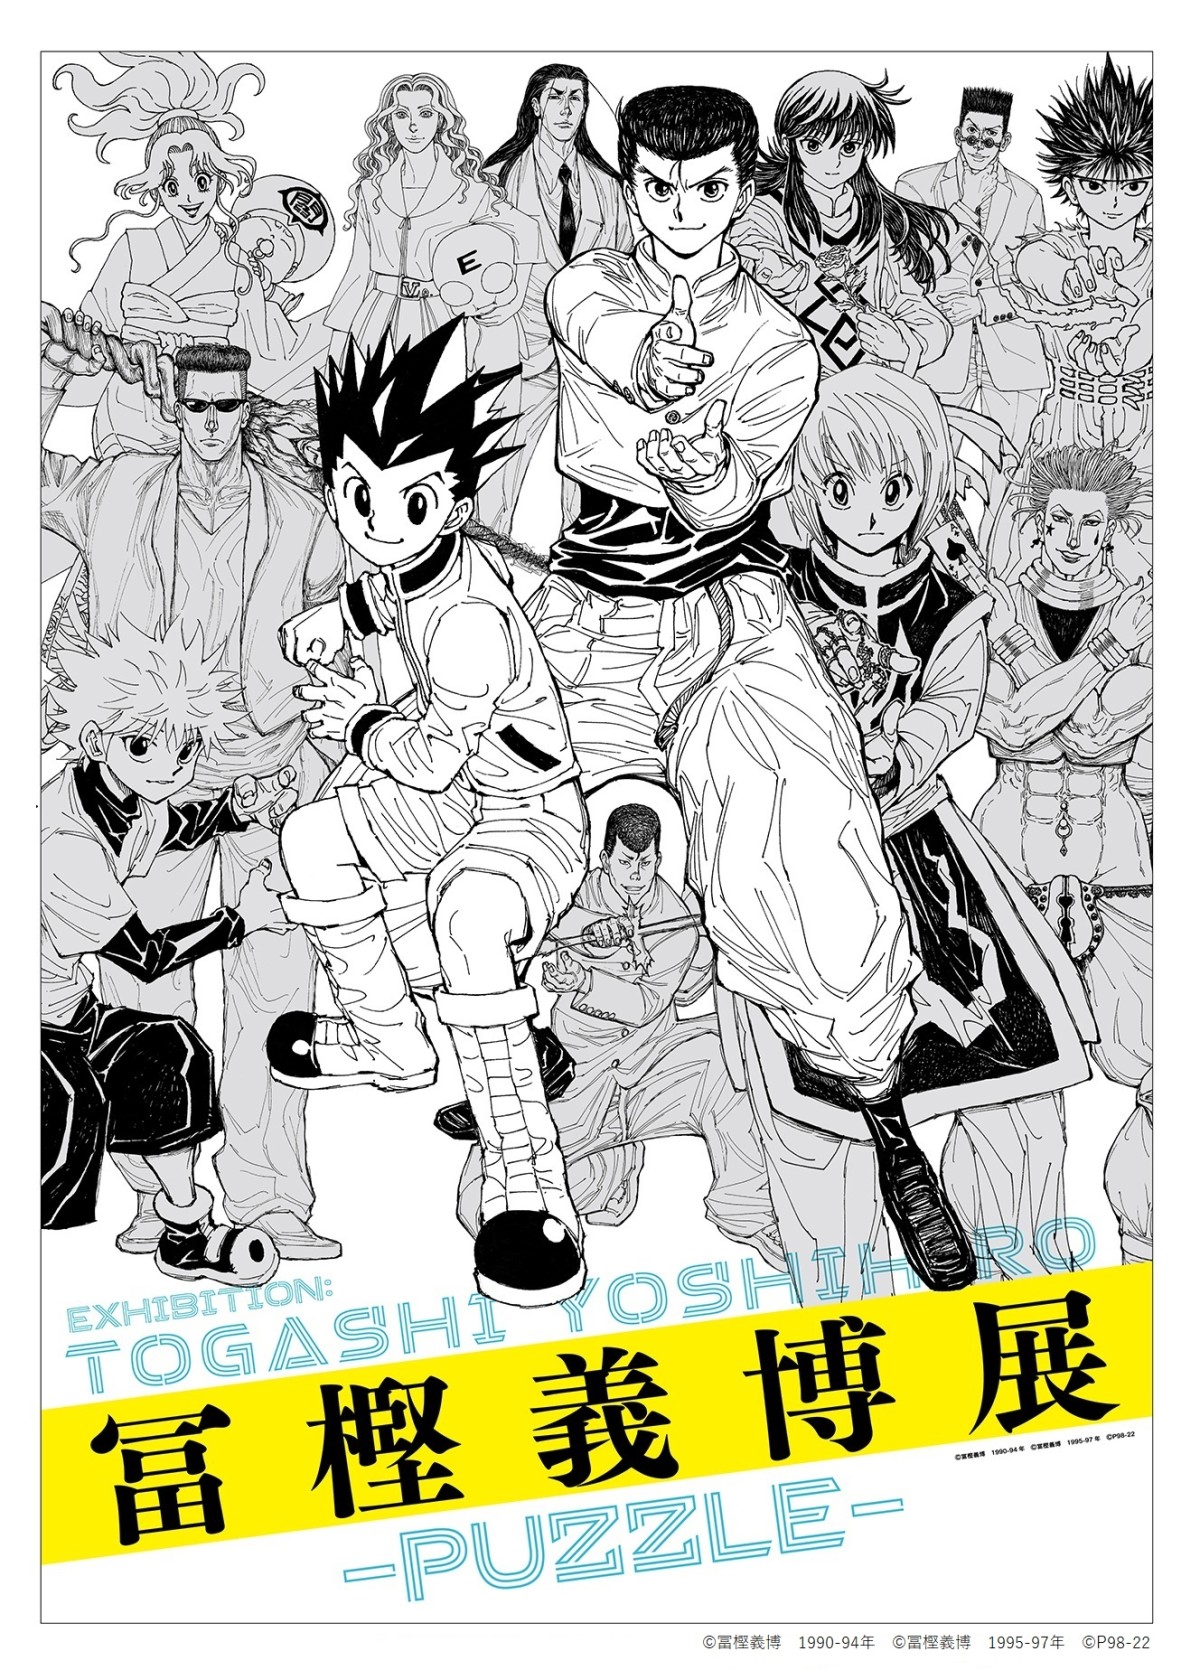 Hunter X Hunter celebrates manga's return with an upcoming